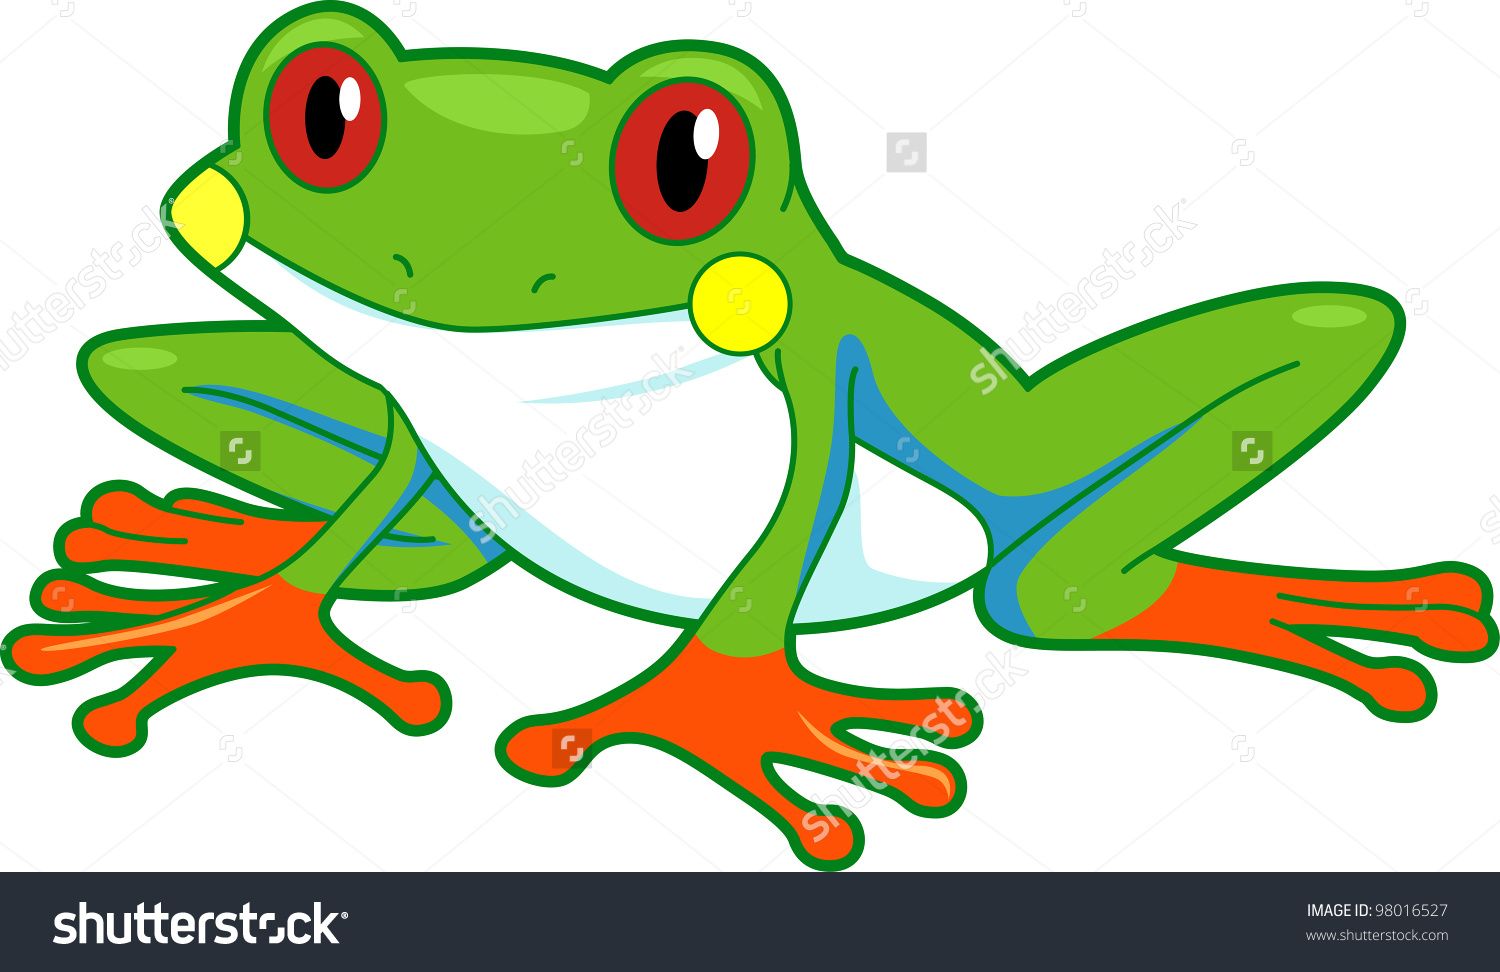 Rainforest frog clipart